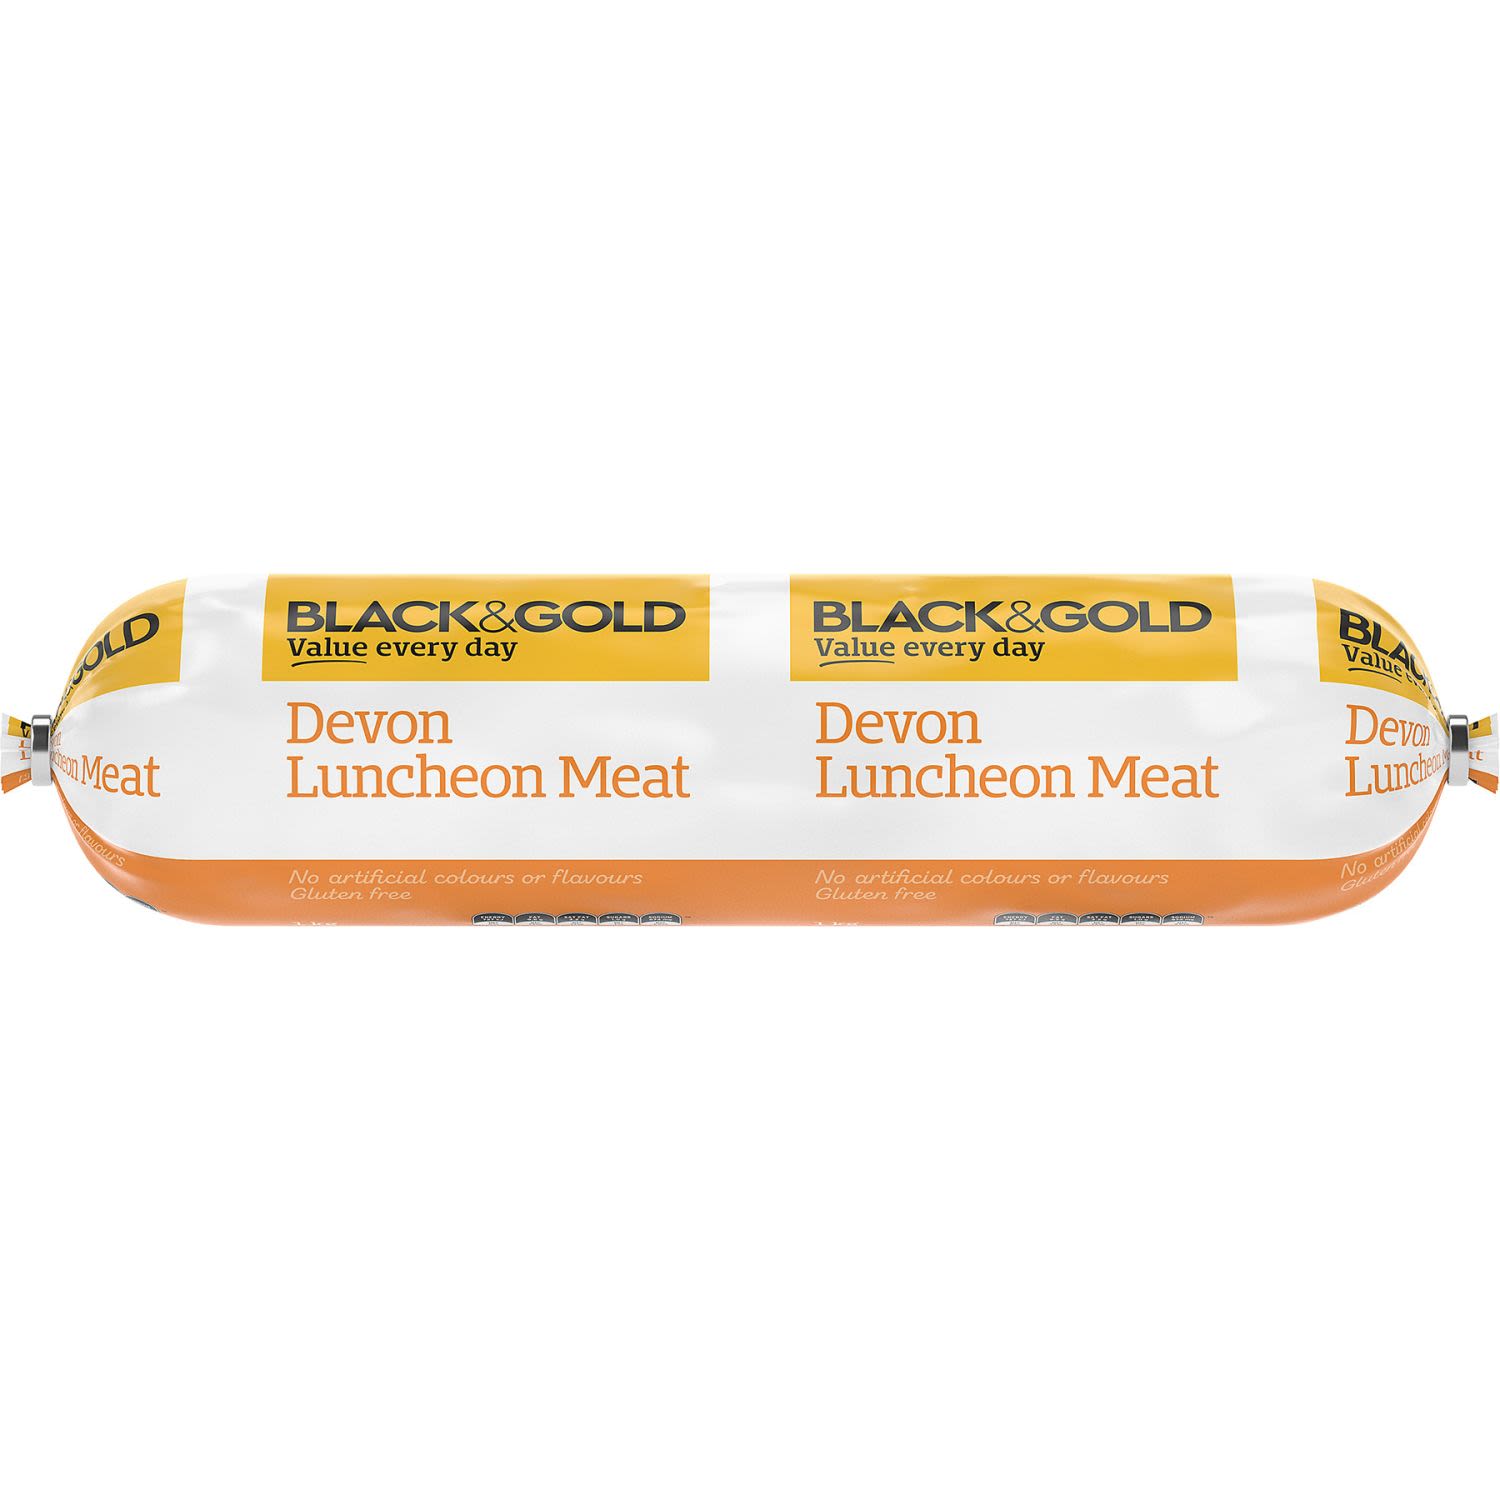 Black & Gold Devon Luncheon Meat, 1 Kilogram